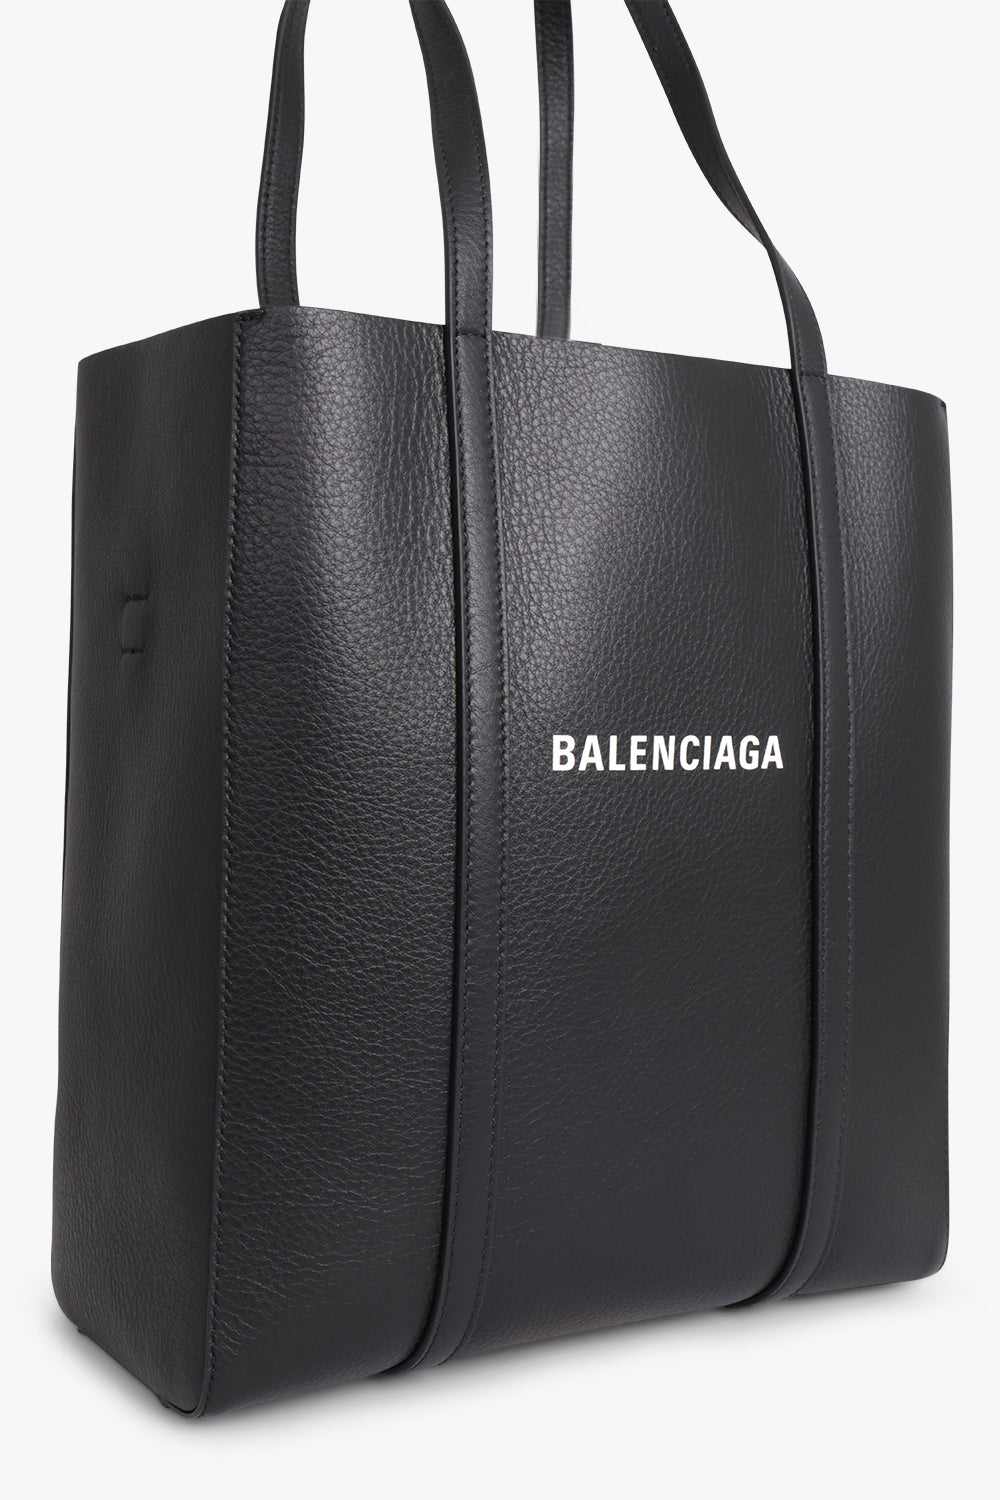 BALENCIAGA BAGS BLACK EVERYDAY XS TOTE | BLACK